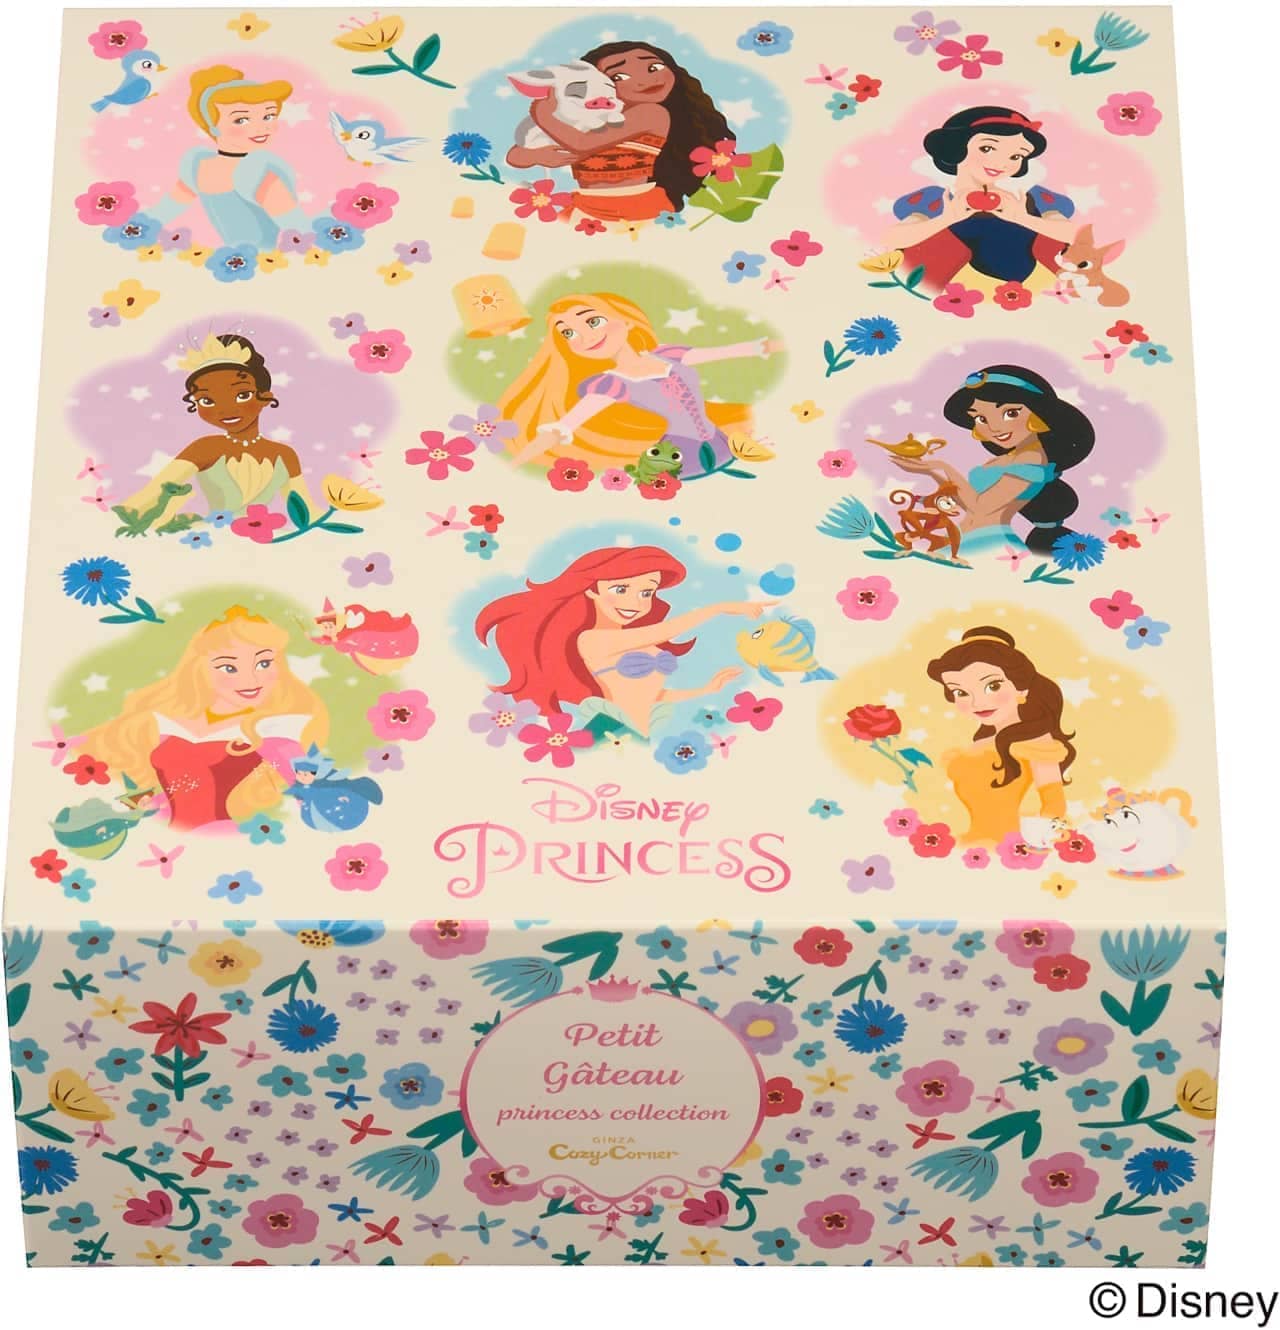 Ginza KOJI CORNER "[Disney Princess] Collection (9 pieces)" Exclusive box